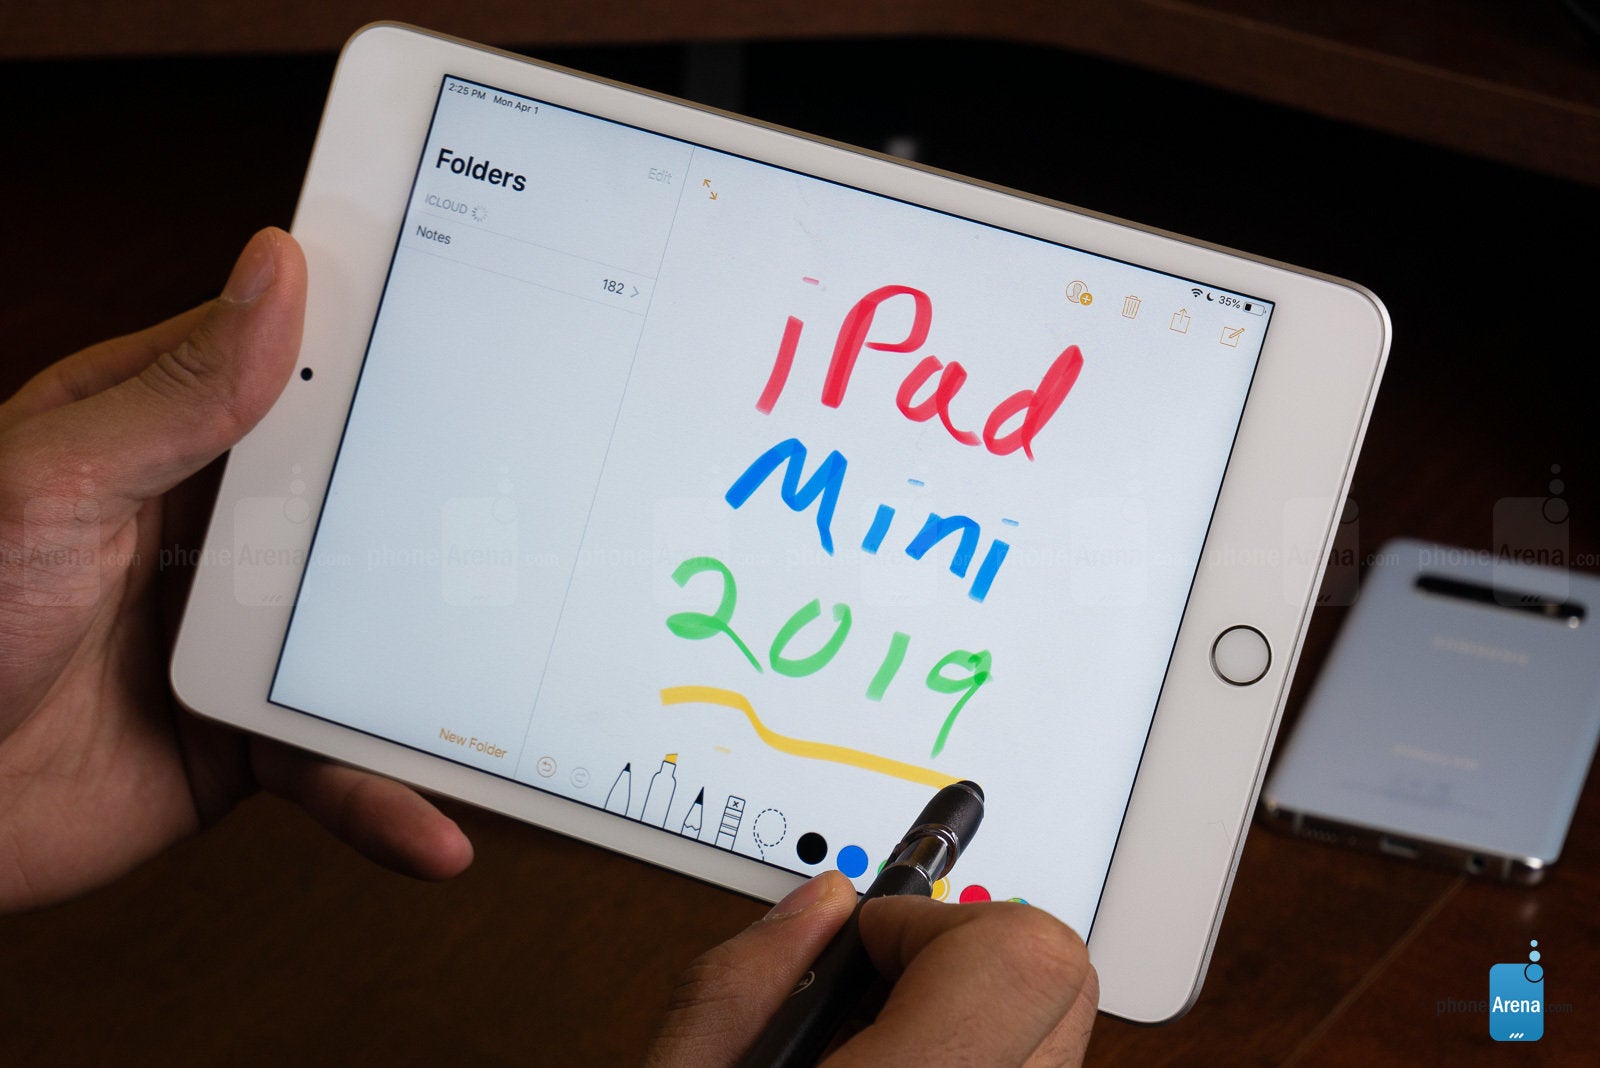 iPad mini (2019) Review